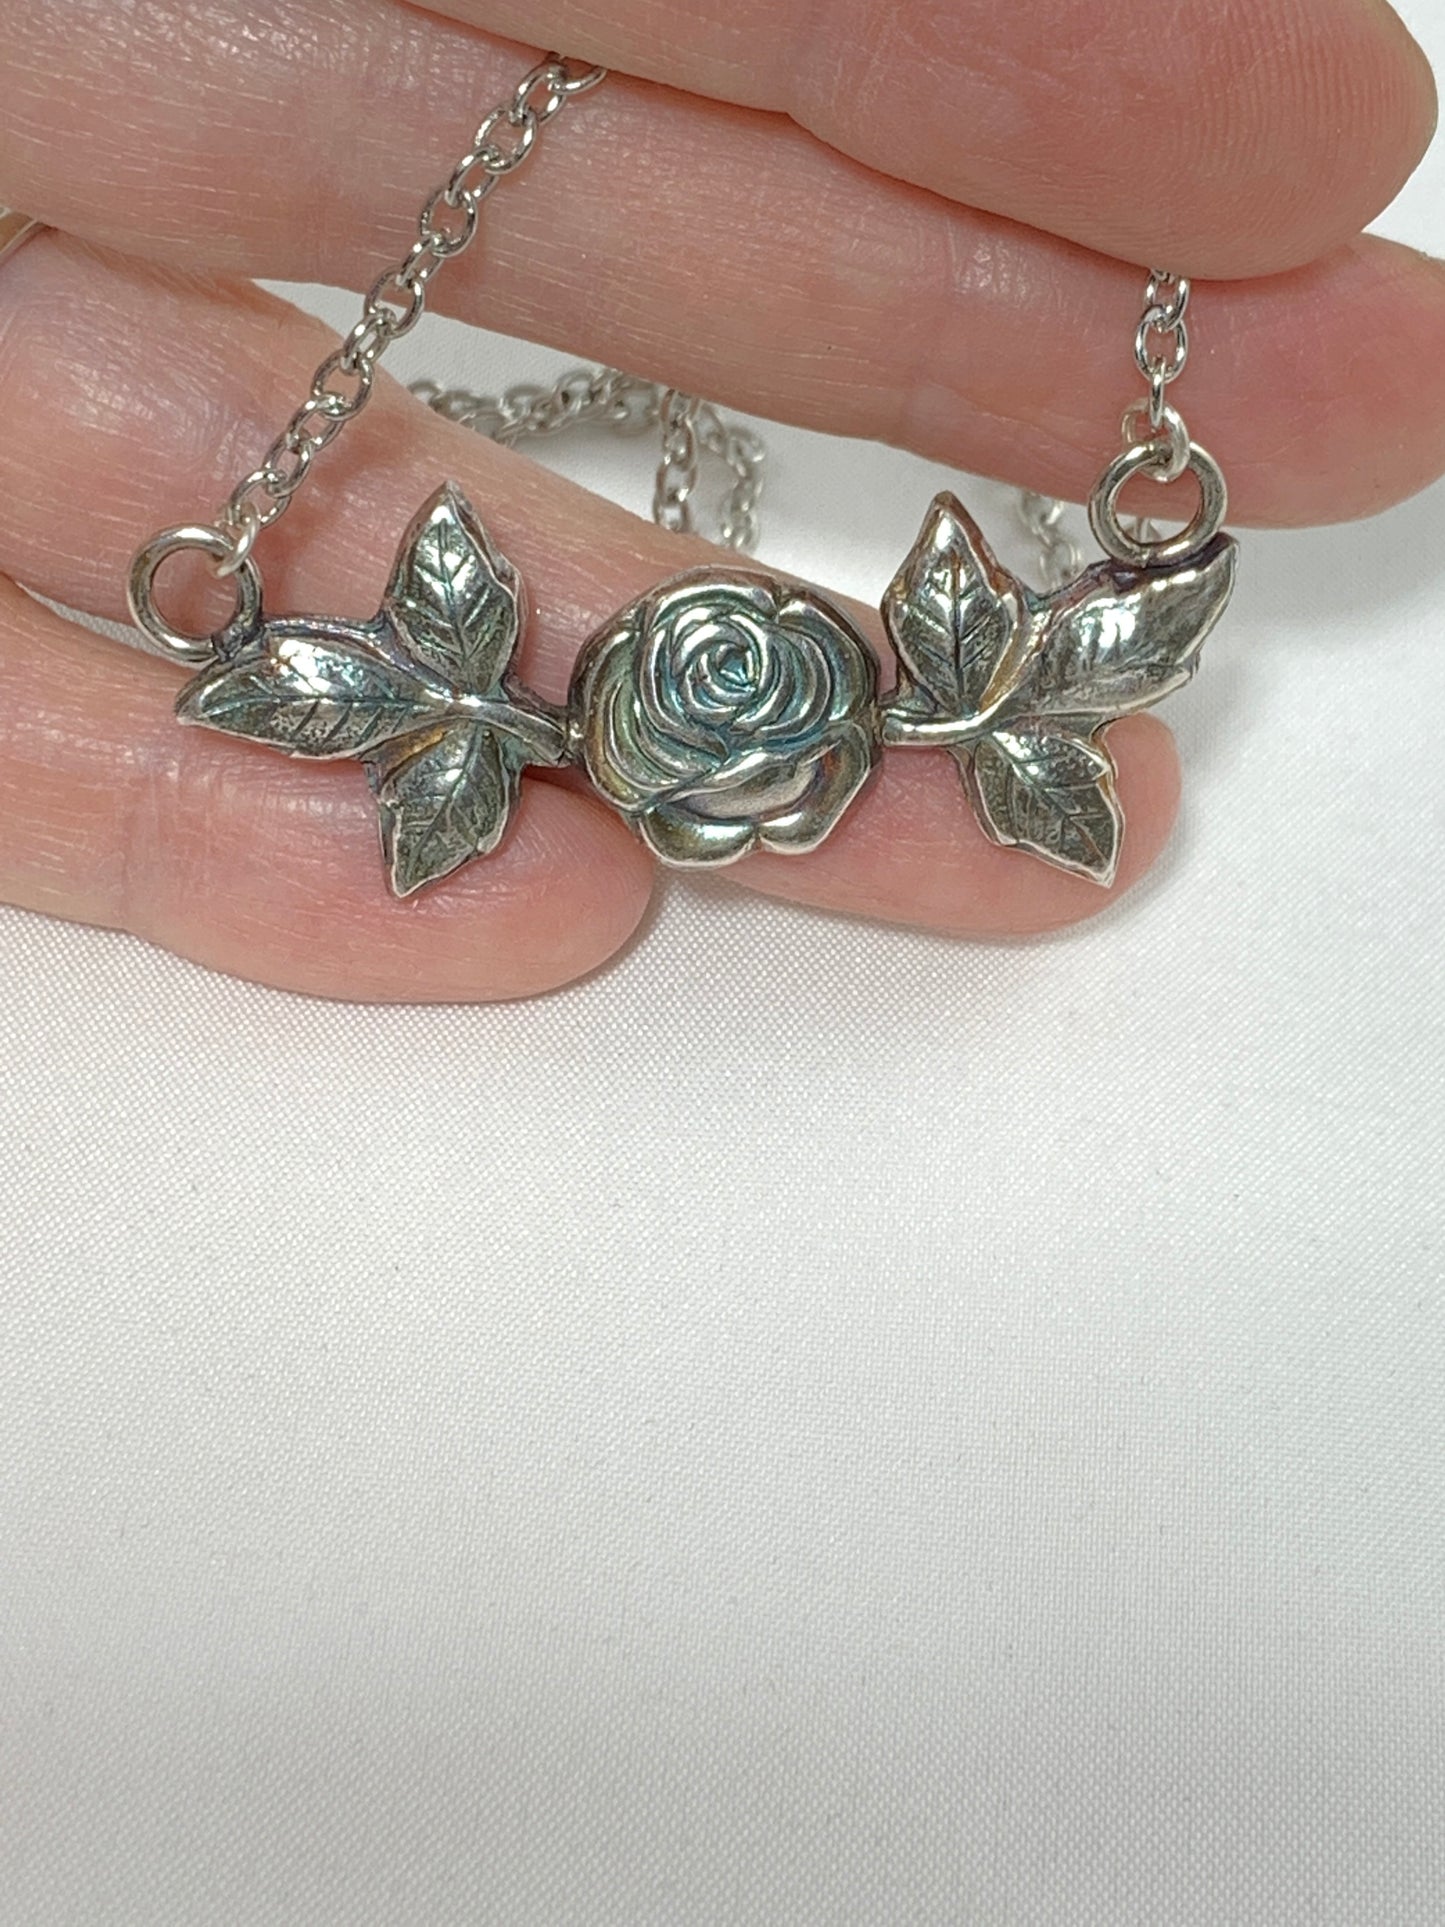 Captivating Silver Rose Pendant Bedrock Rose